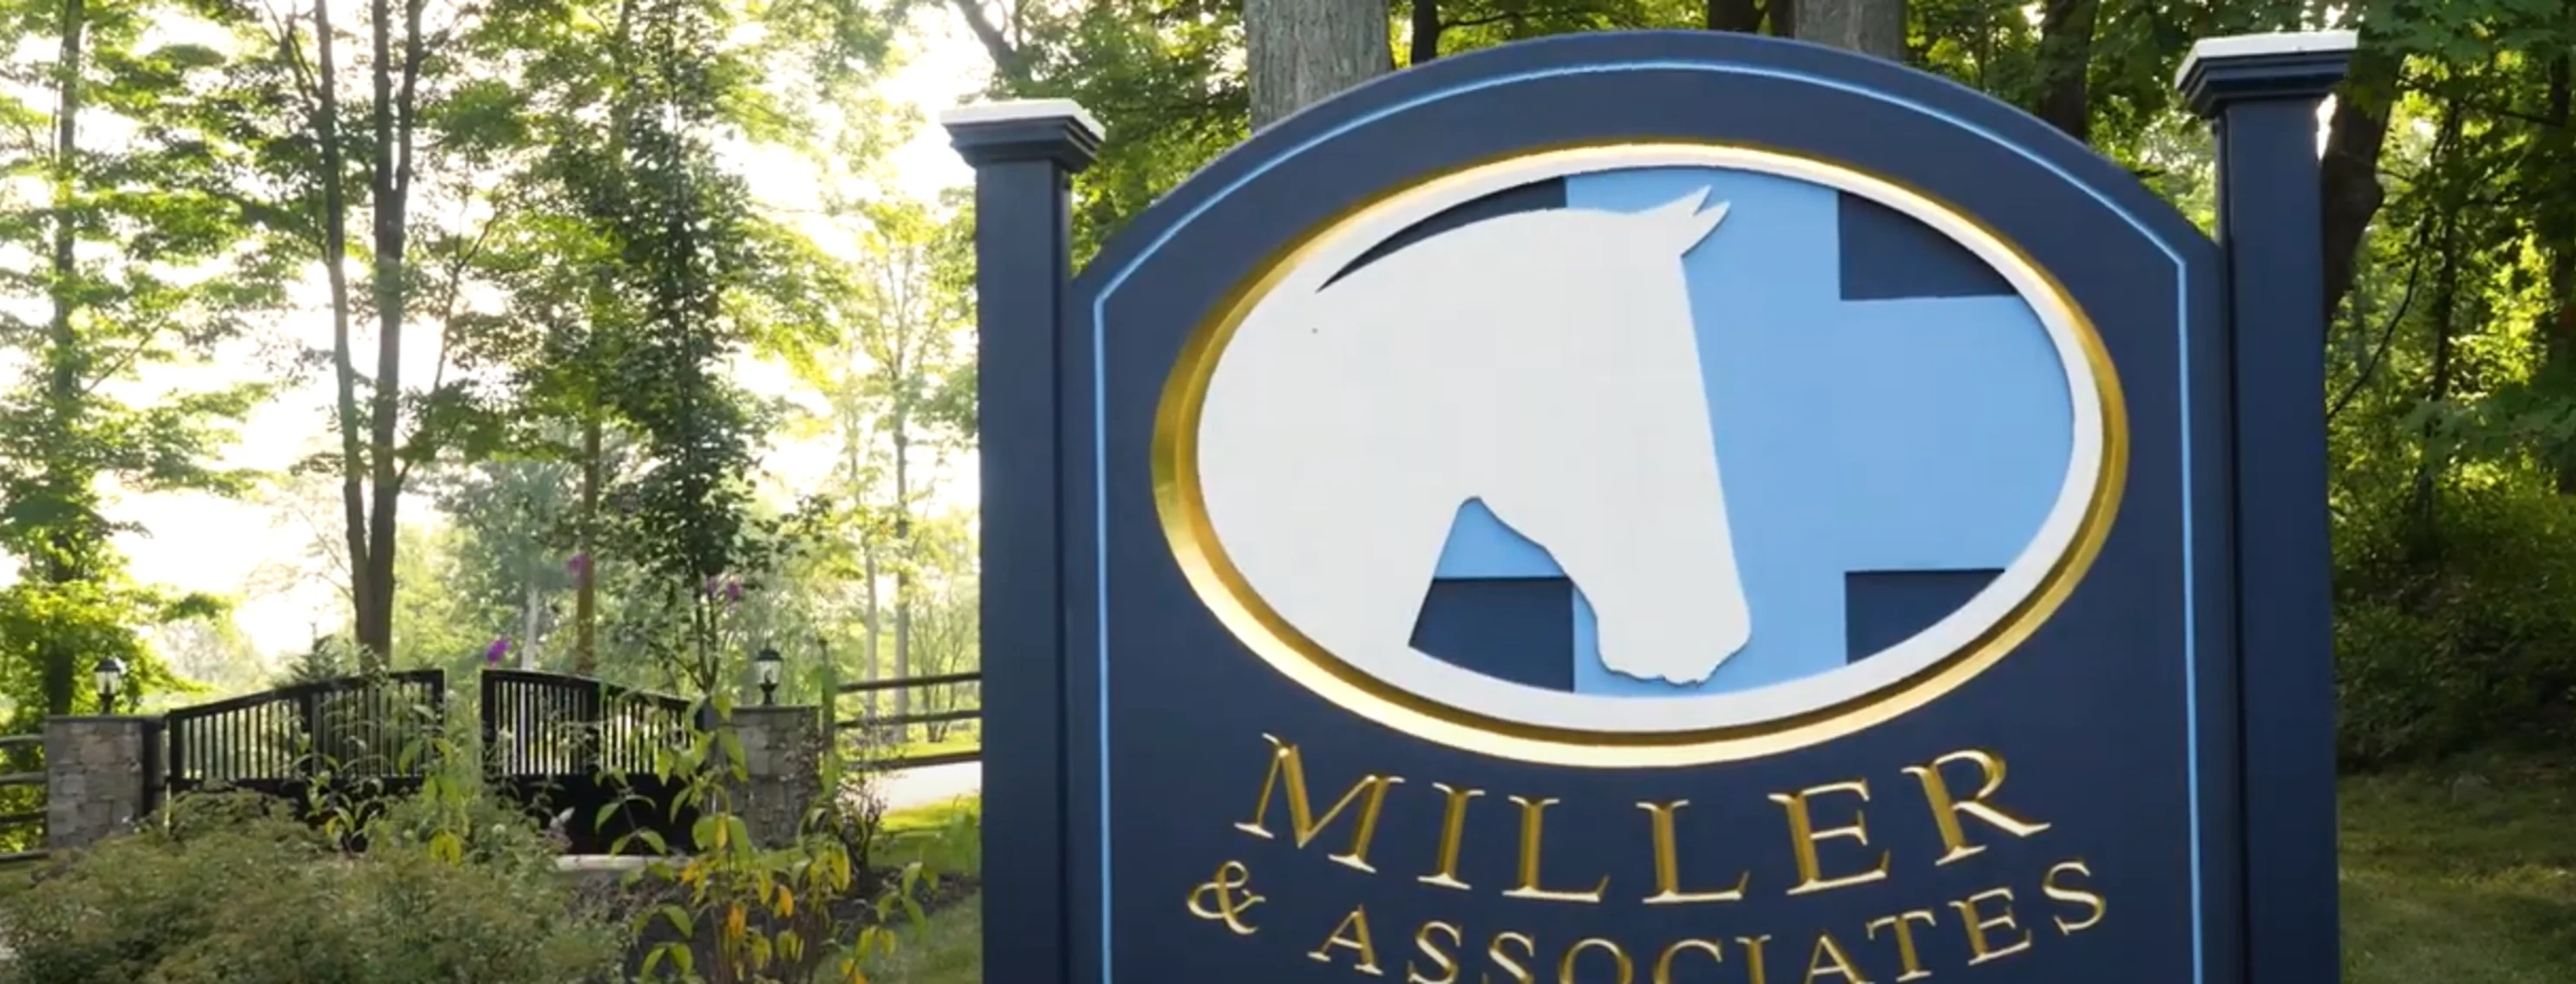 Miller and Associates sign